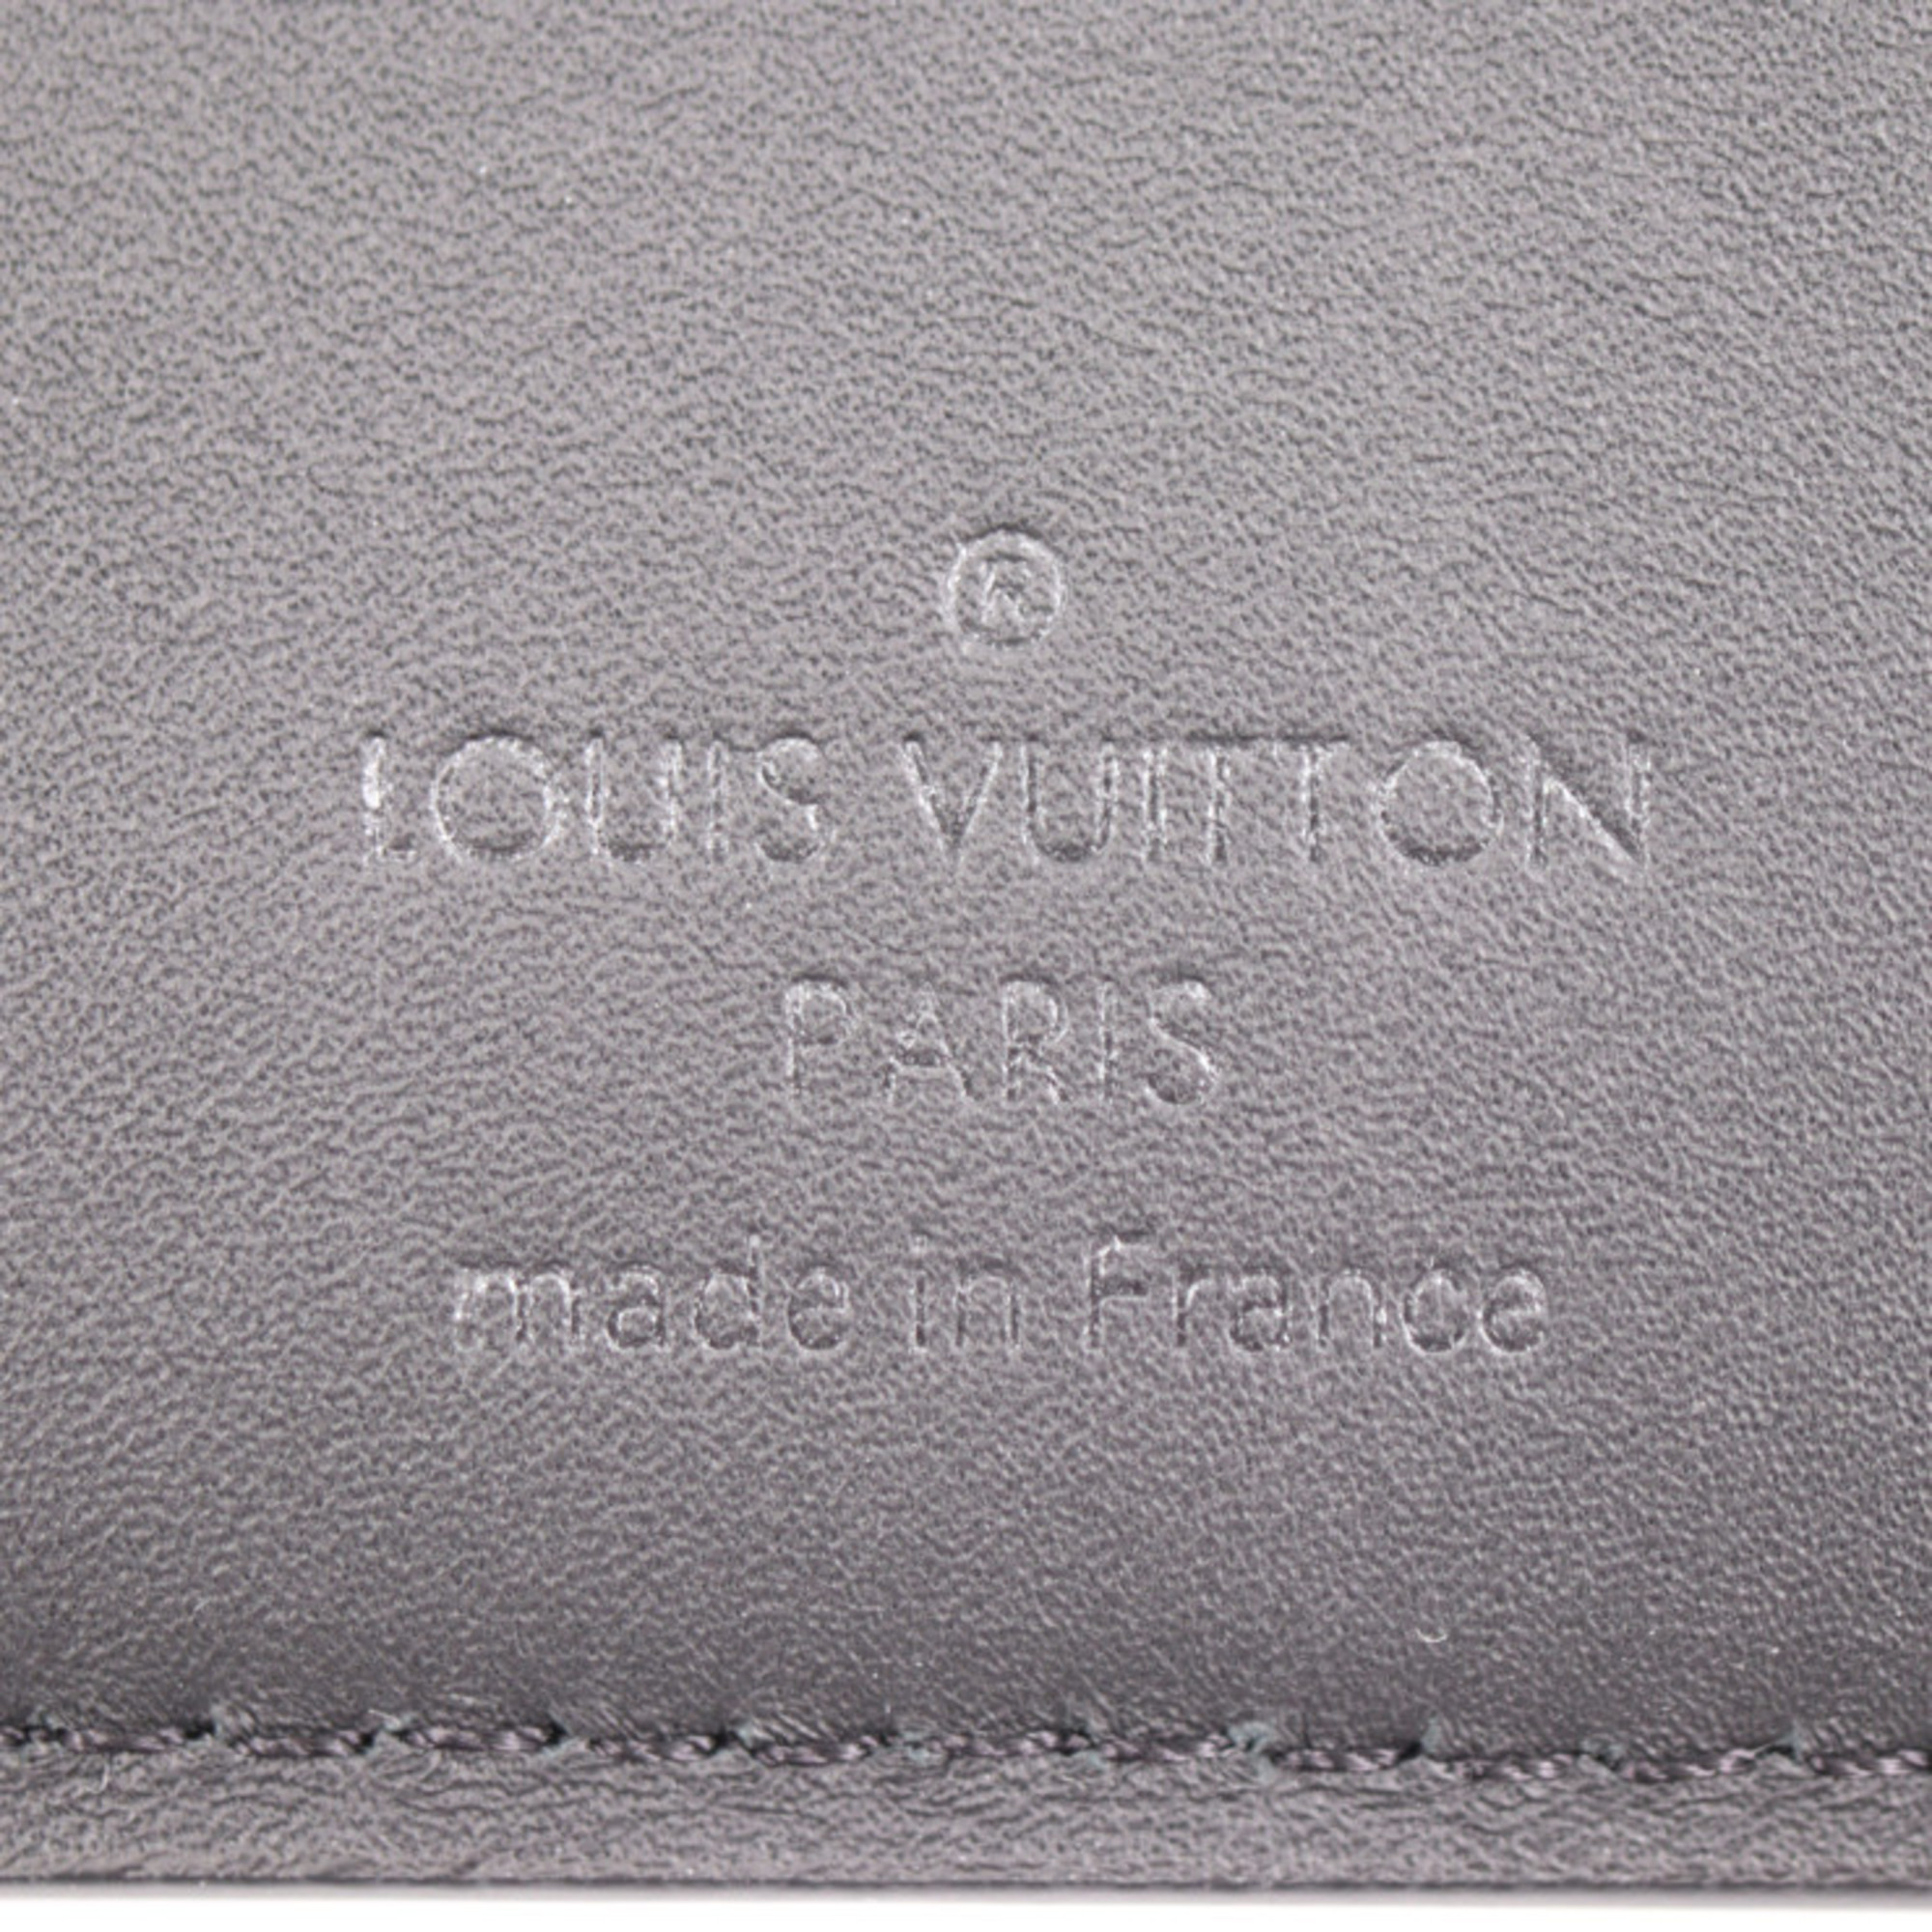 LOUIS VUITTON Louis Vuitton Portefeuille Multiple Monogram Bi-fold Wallet M82072 Taurillon Leather Black Billfold